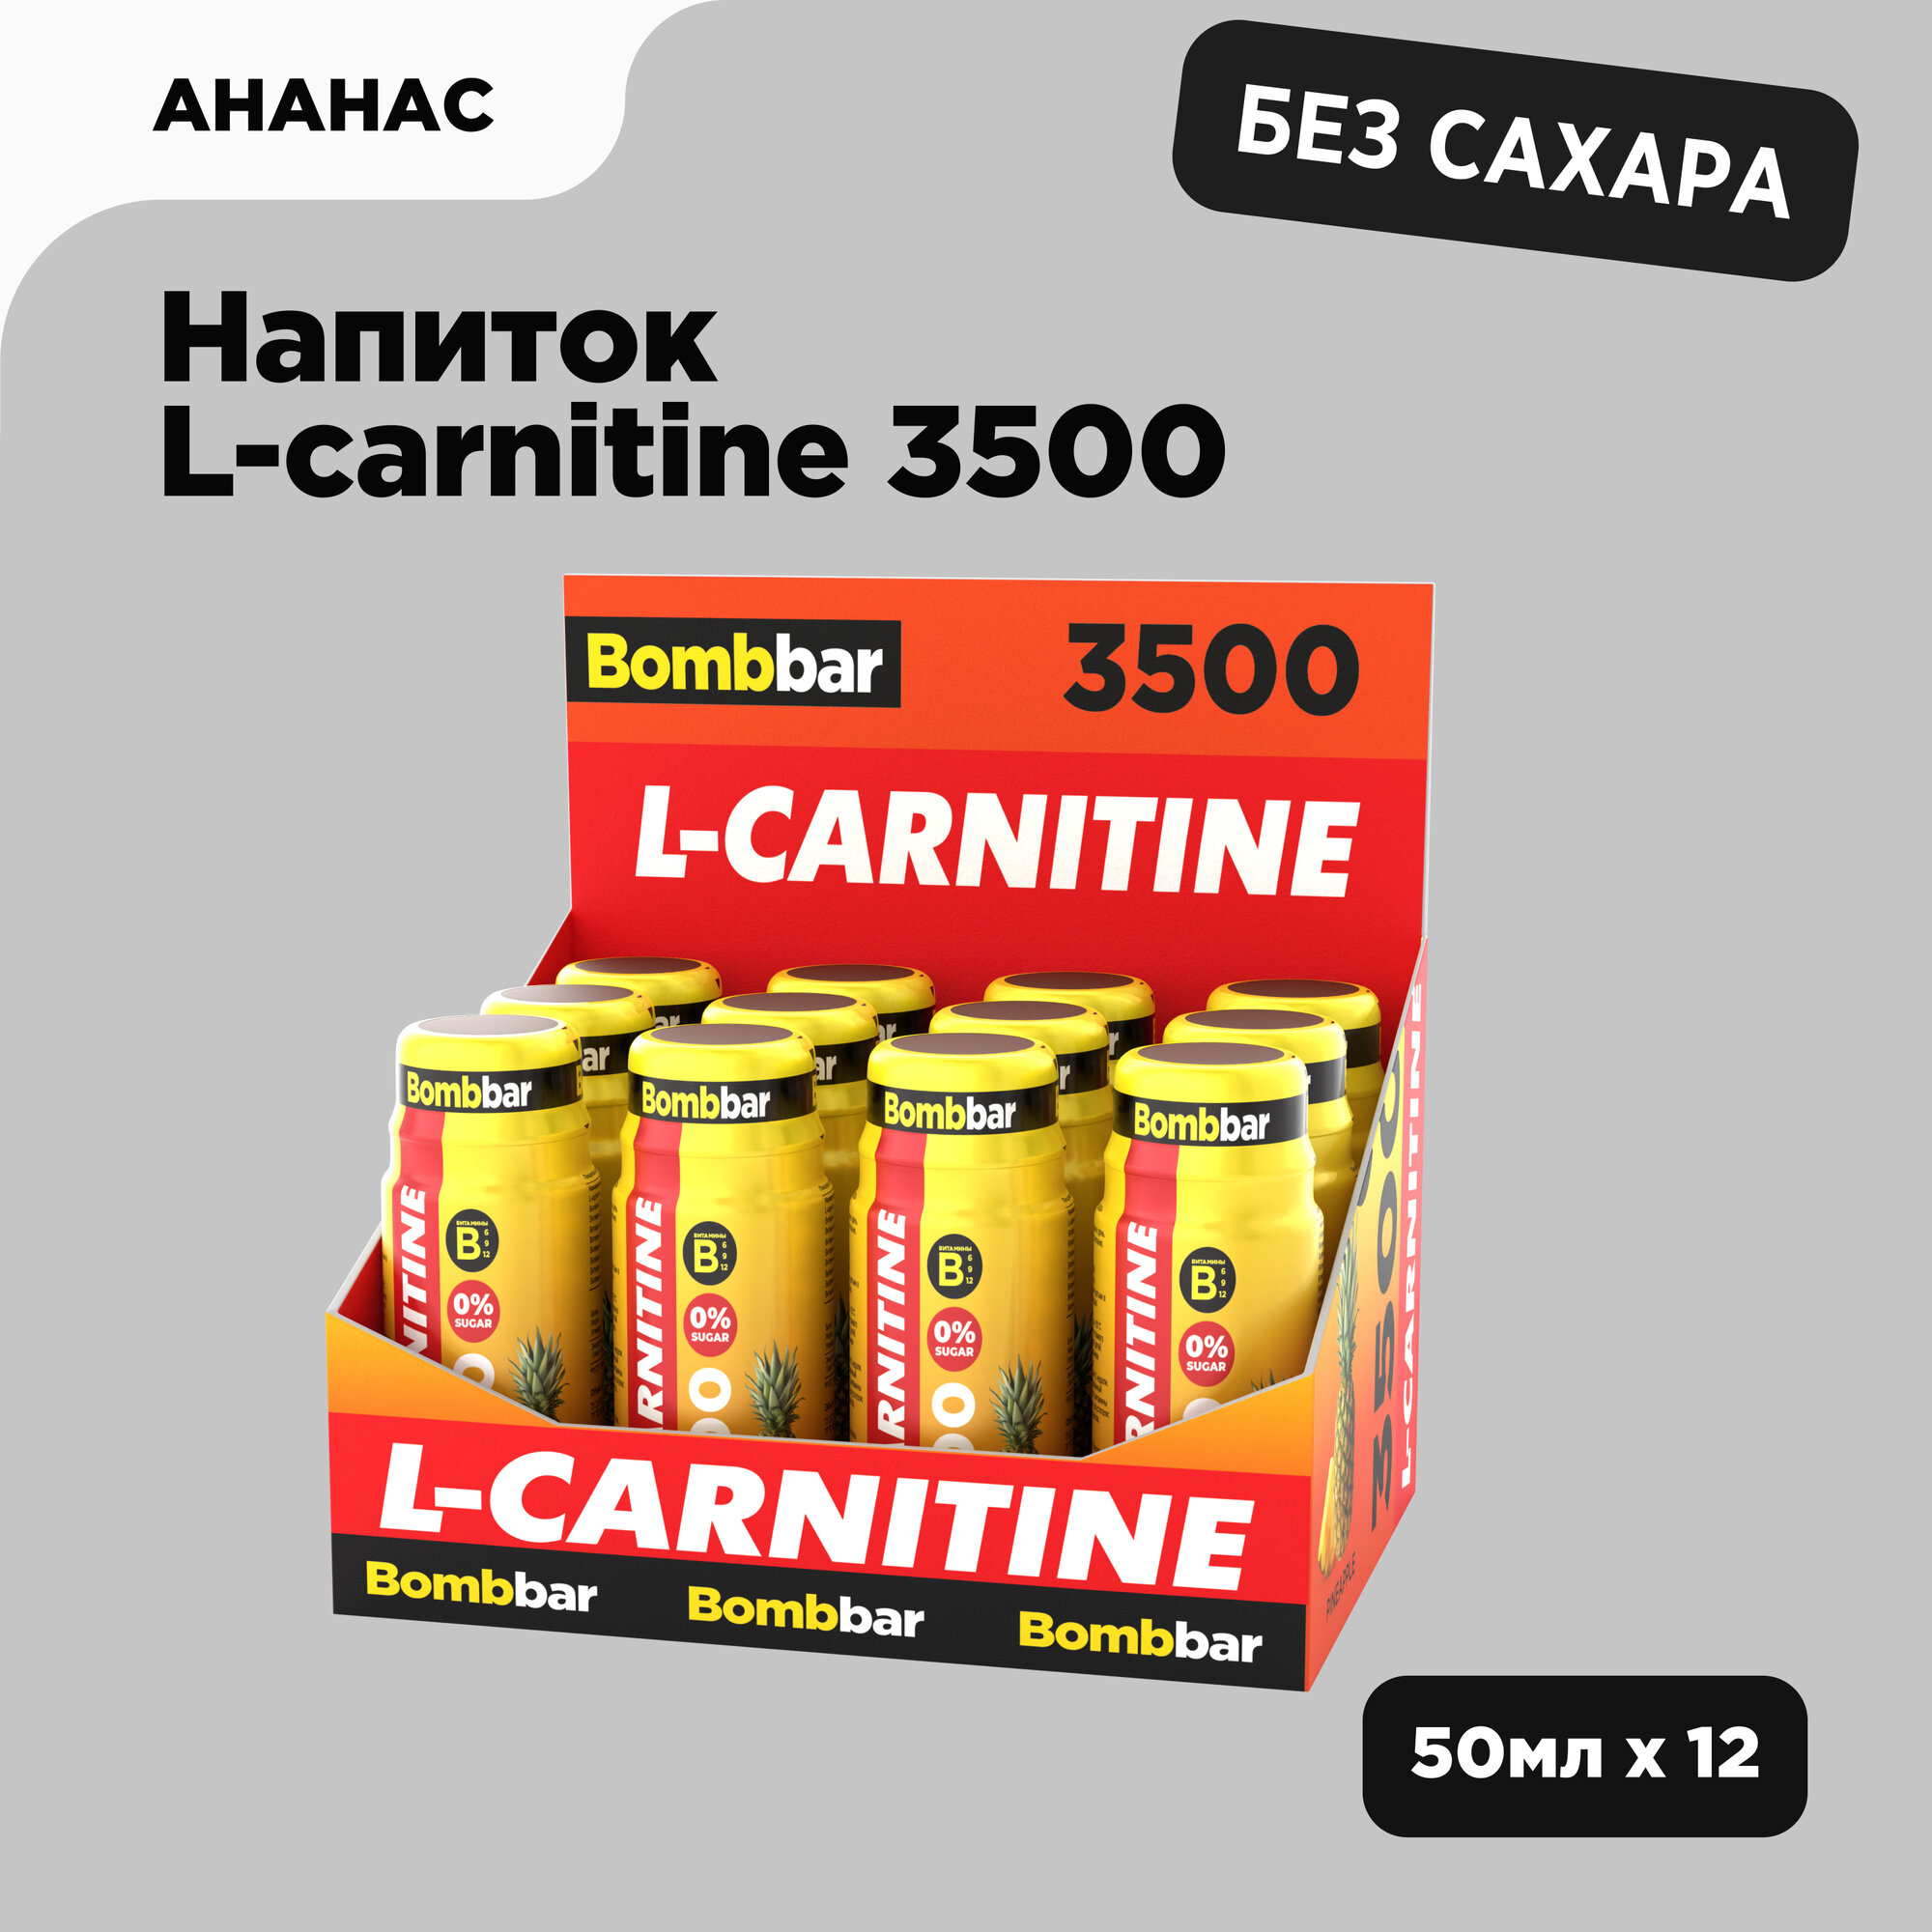 Bombbar Тонизирующий напиток L-carnitine 3500 без сахара Ананас, 12шт х 50мл